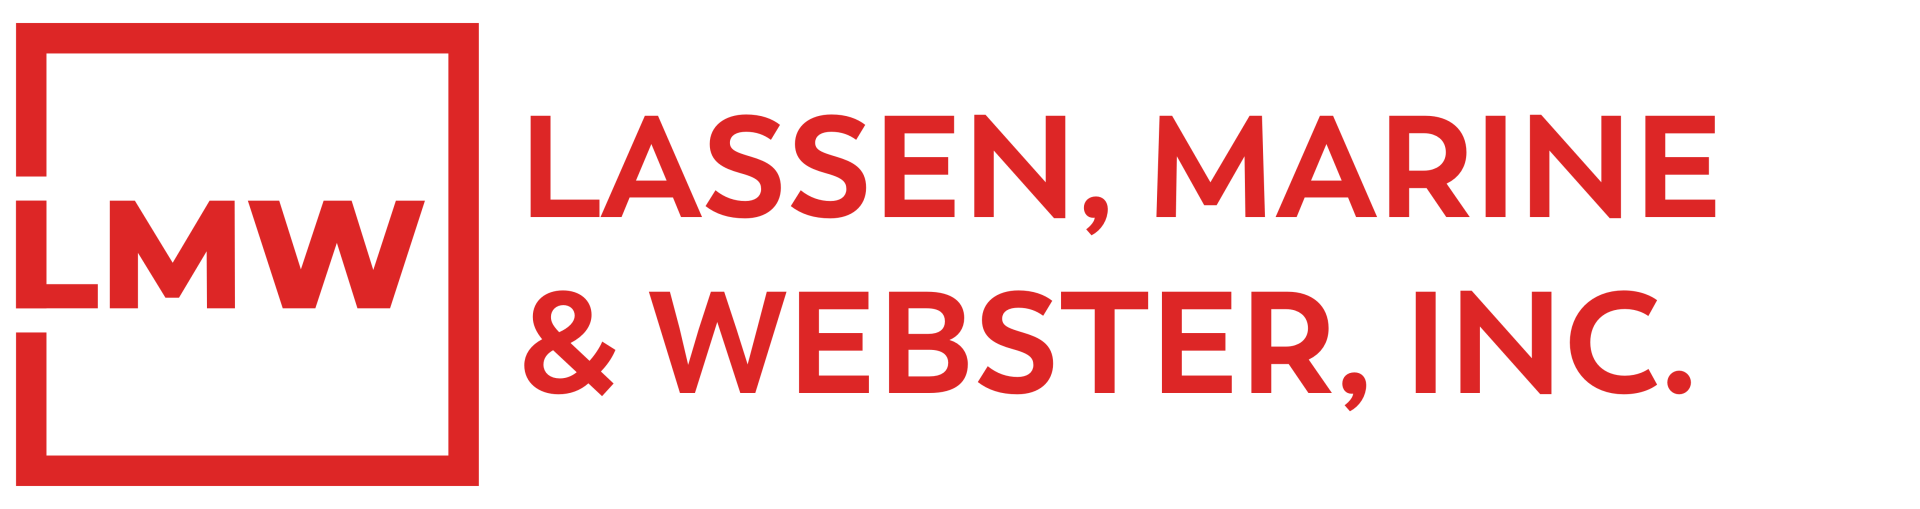 Lassen, Marine & Webster, Inc.